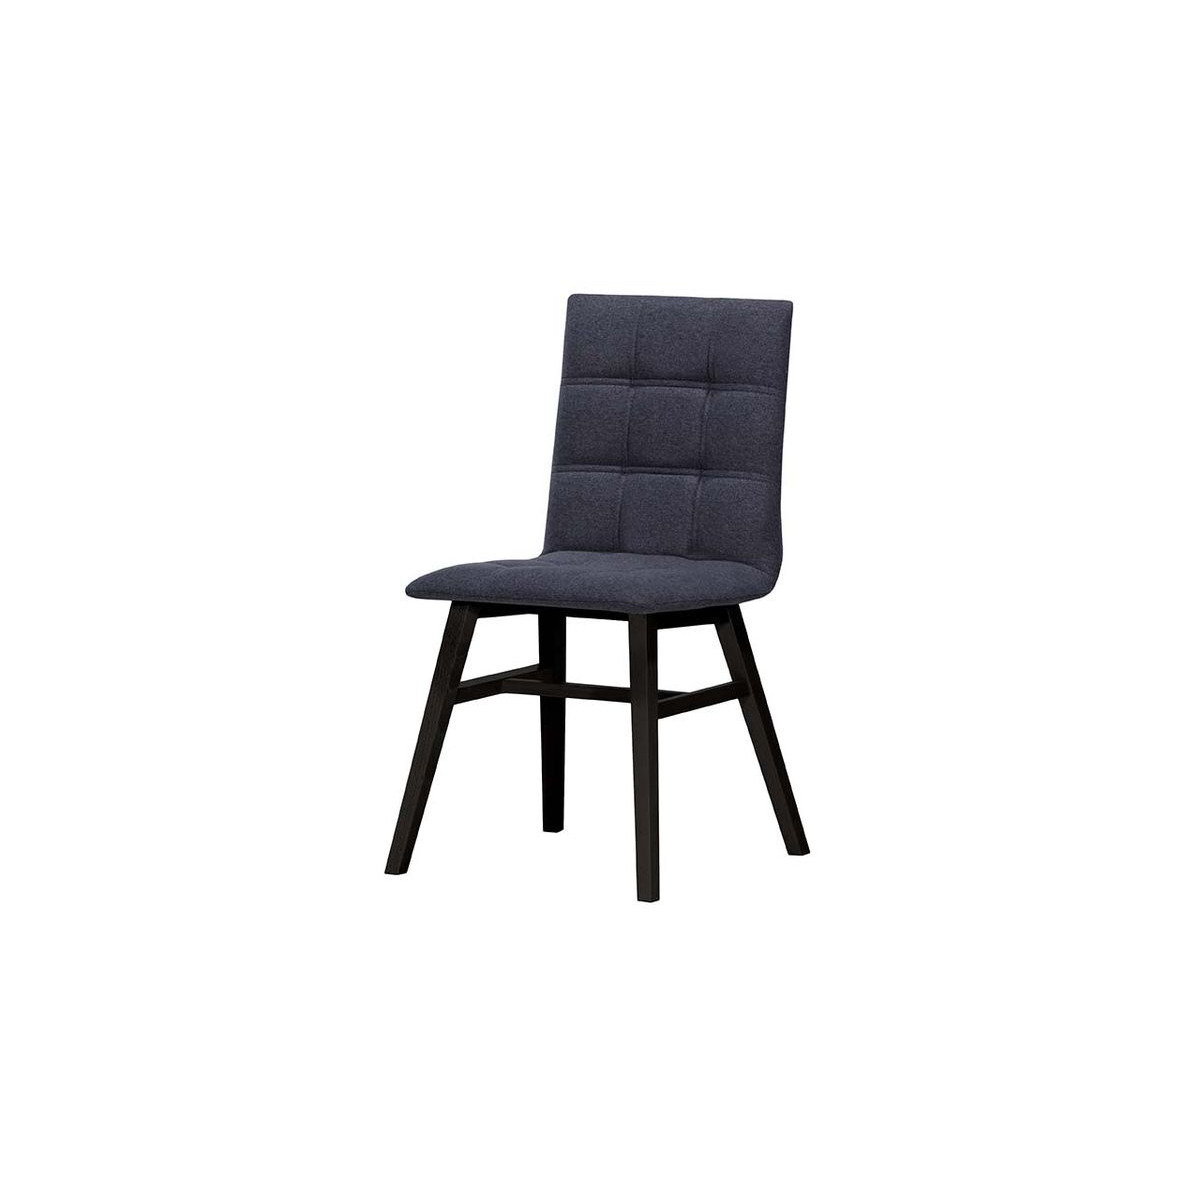 Fafa Dining Chair, navy blue, Leg colour: black - image 1